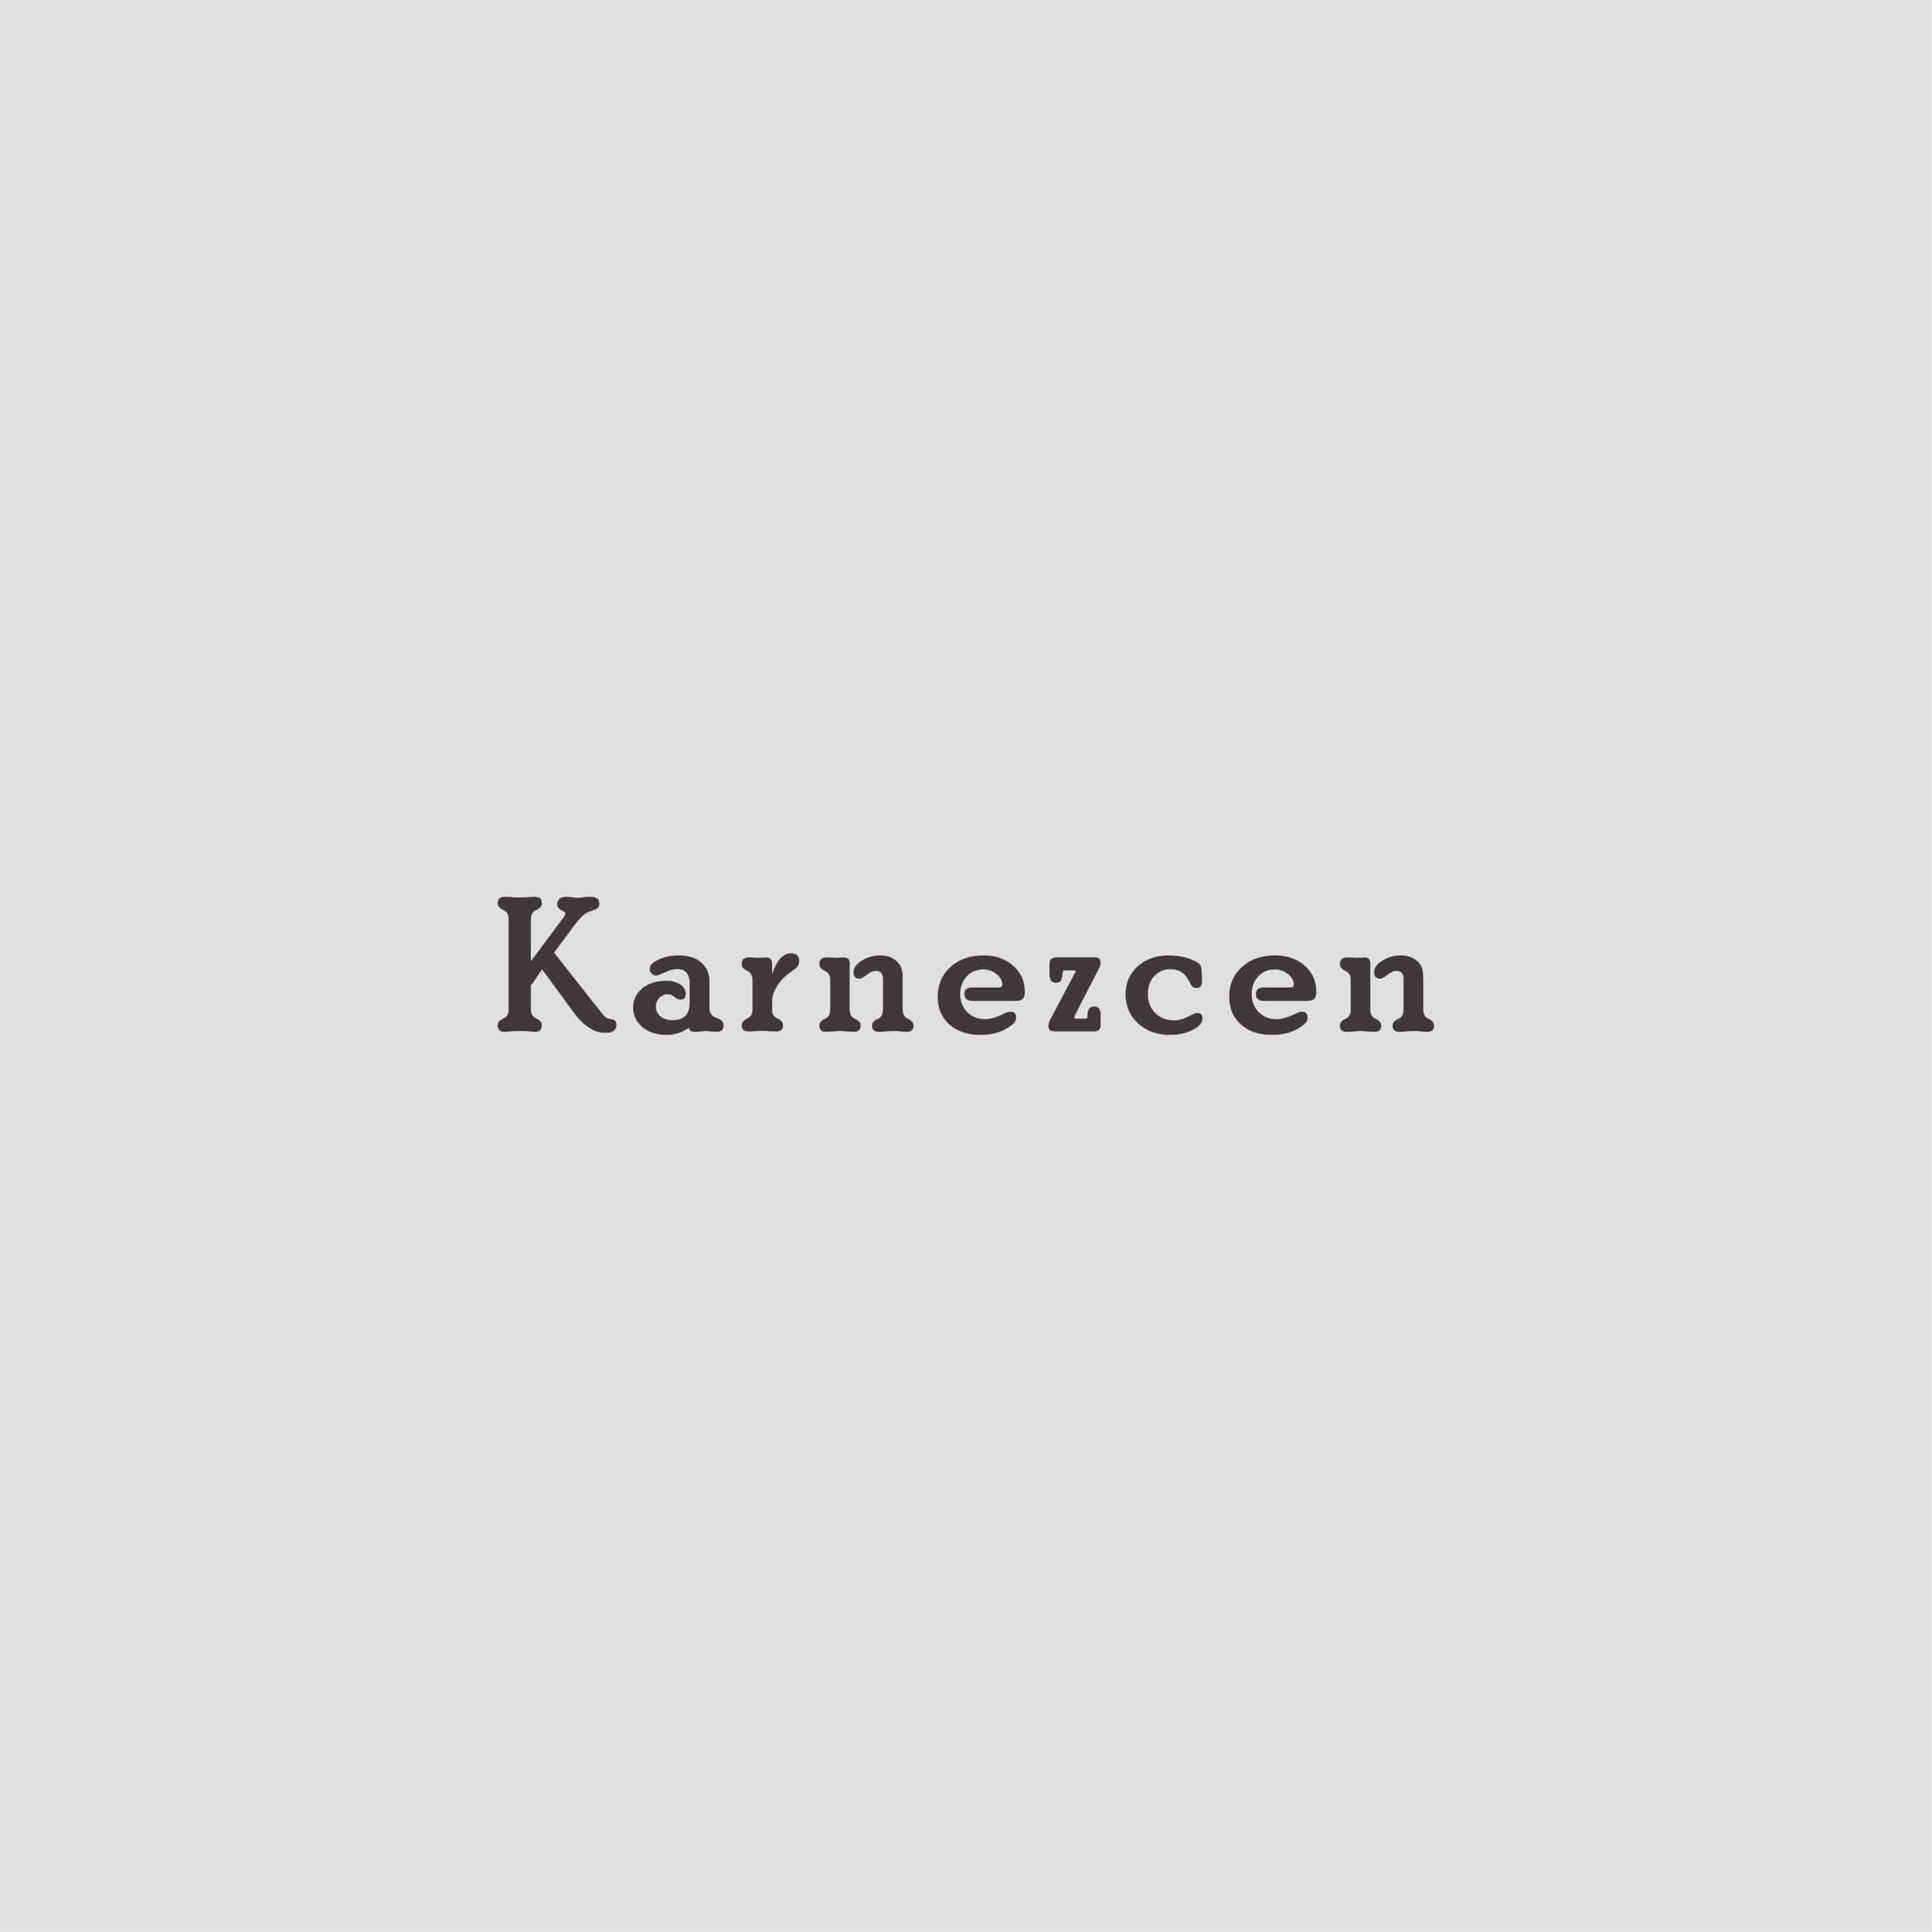 Karnezcen